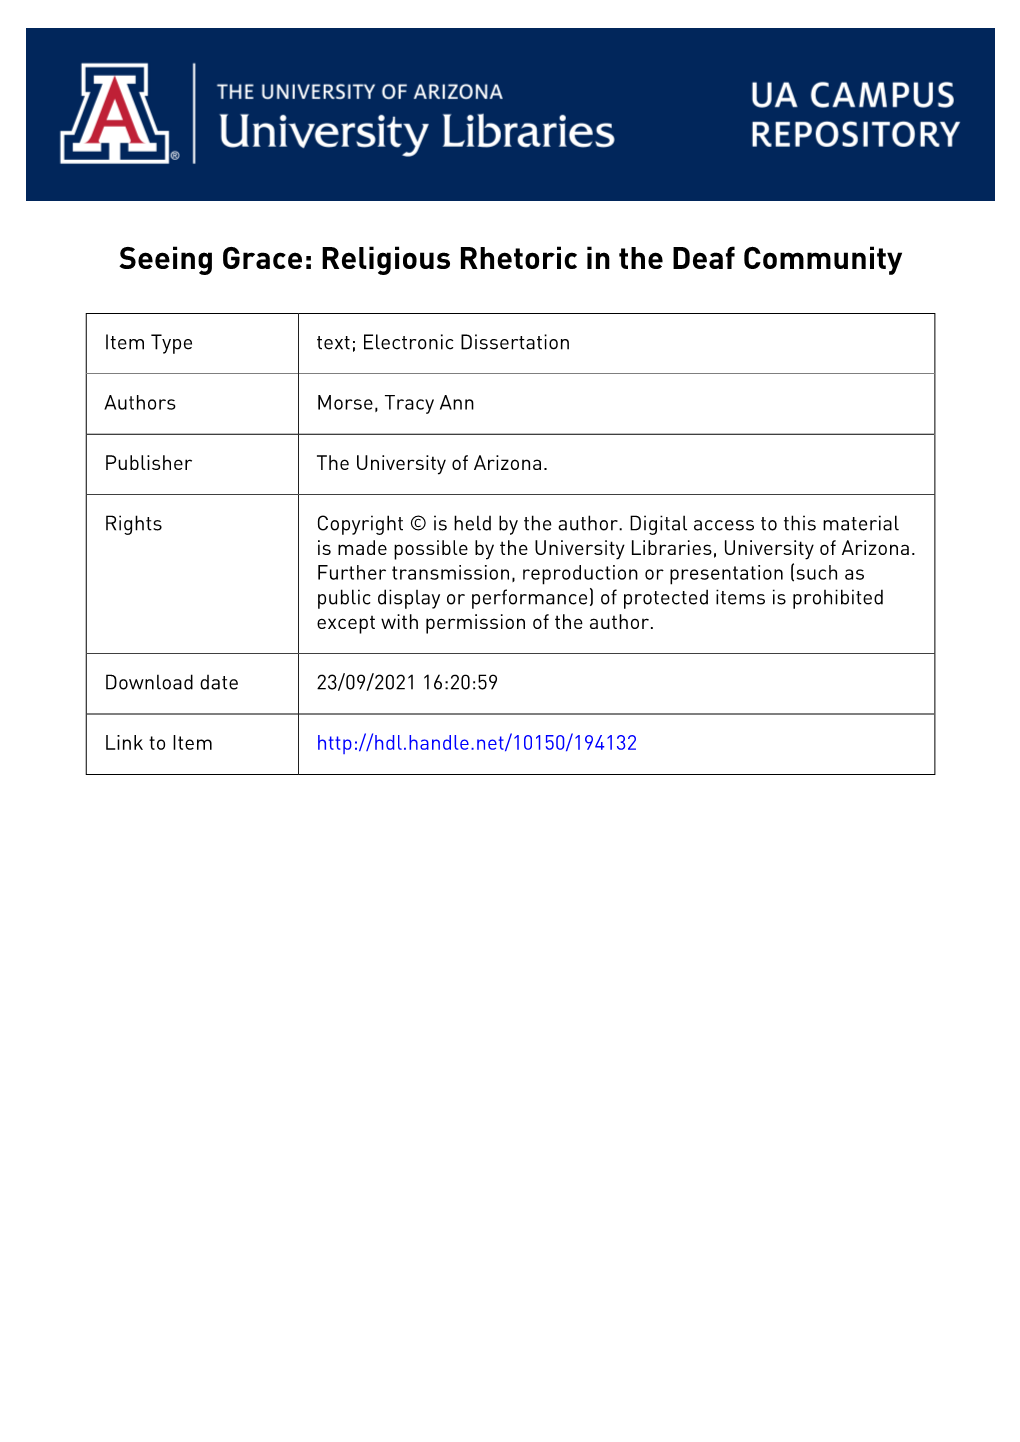 RELIGIOUS RHETORIC in the DEAF COMMUNITY by Tracy Ann